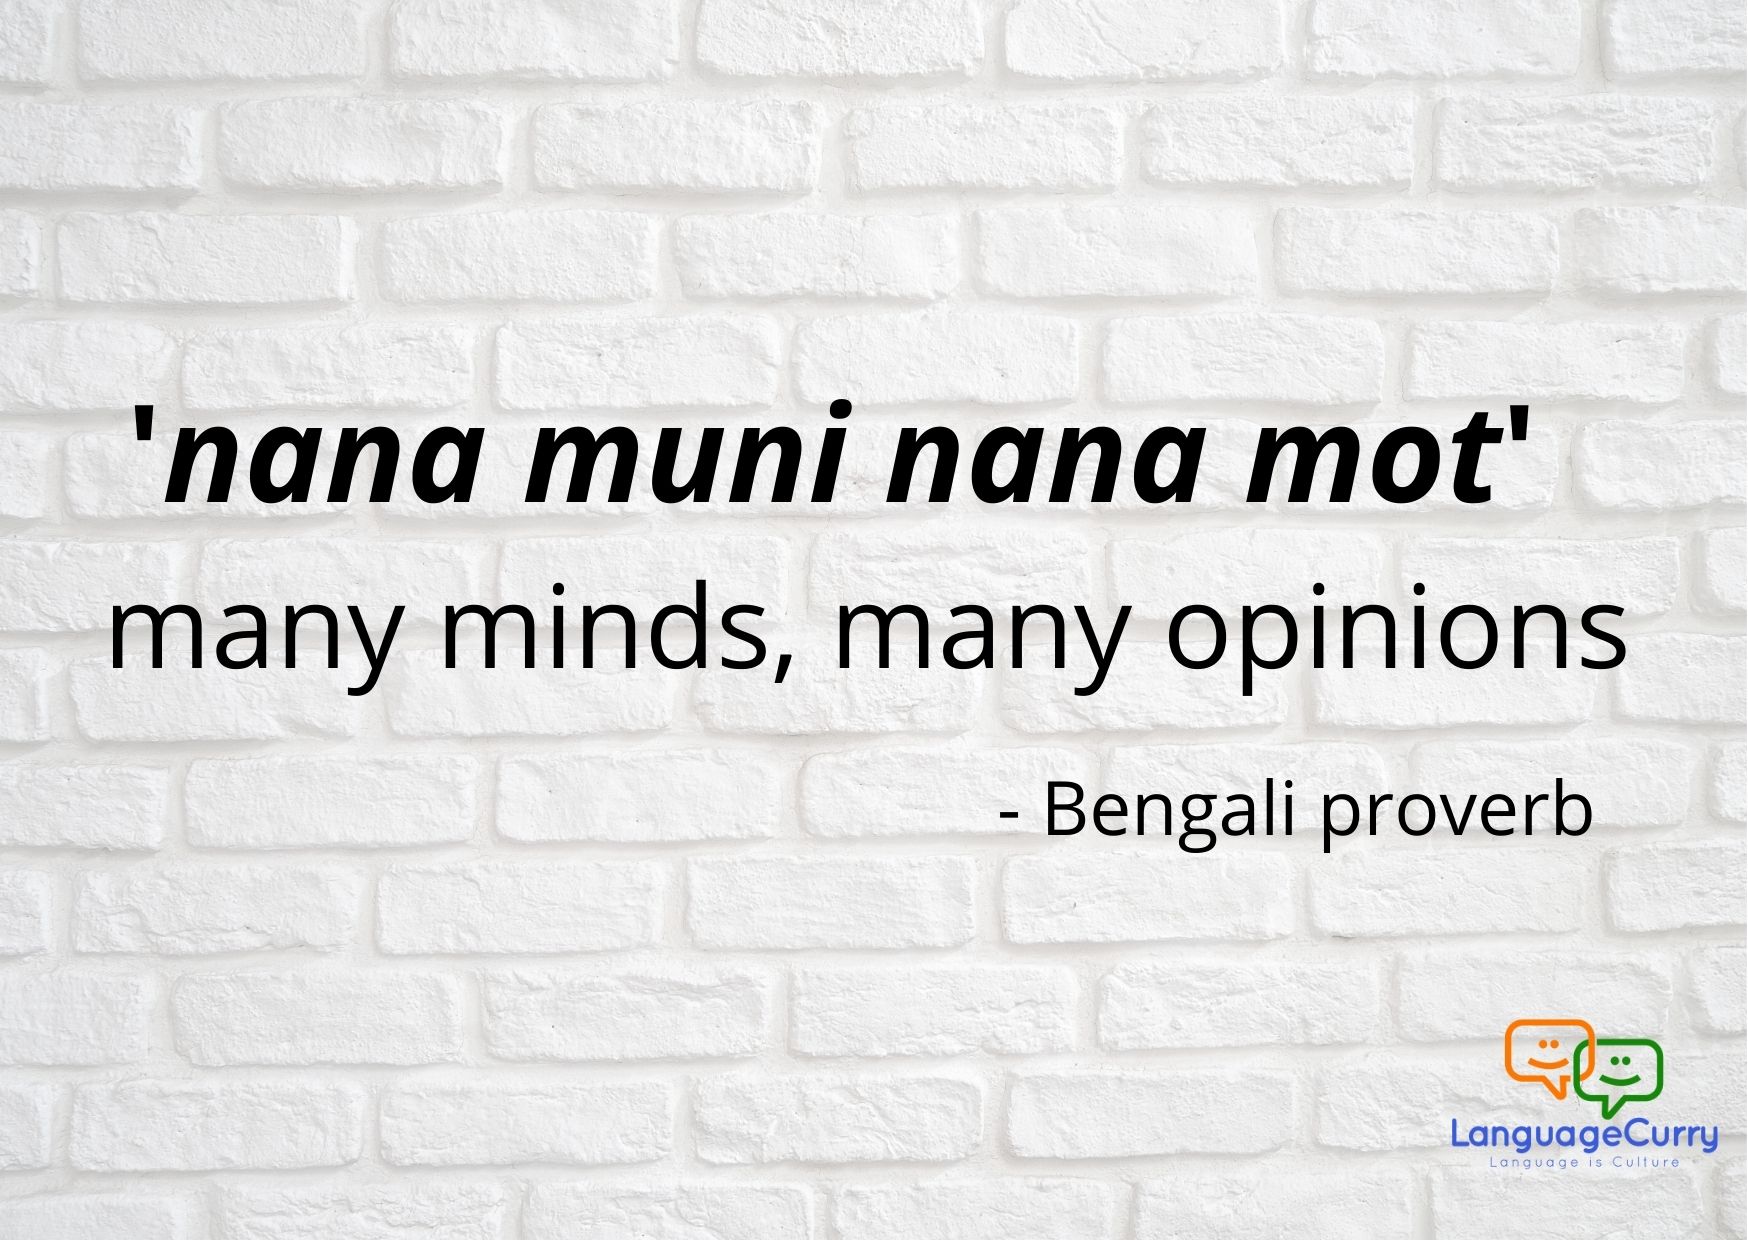 Bengali proverbs and idioms